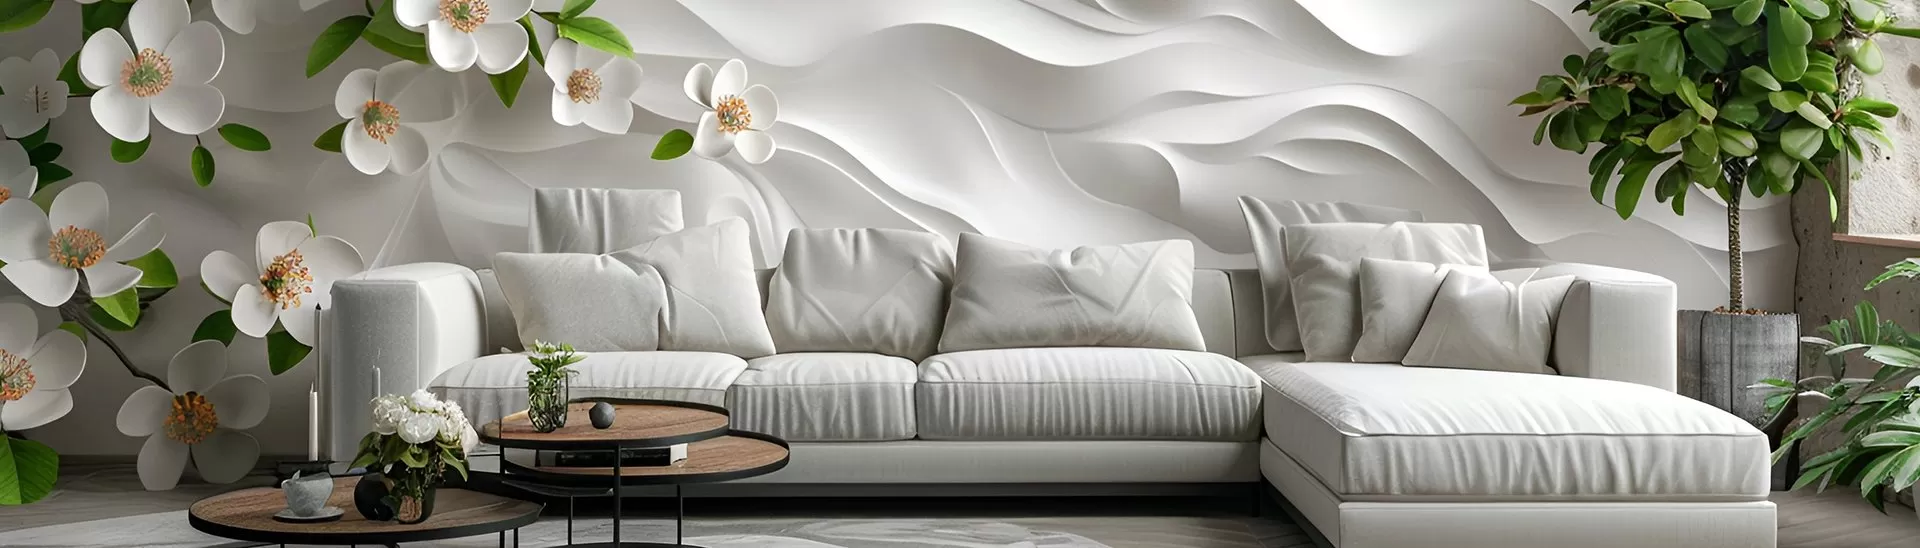 Innovative 3D Wall Design Ideas for a Modern Living Room 